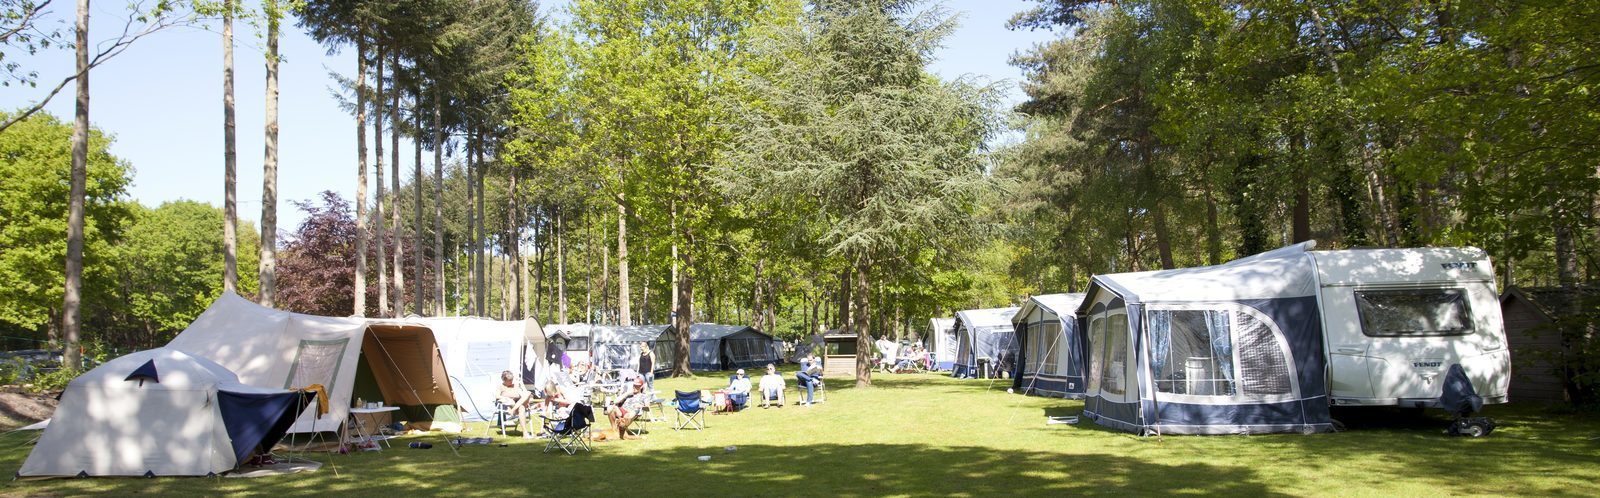 wapenkamer aflevering Verblinding Camping in Gelderland ⛺ | In de natuur | TopParken